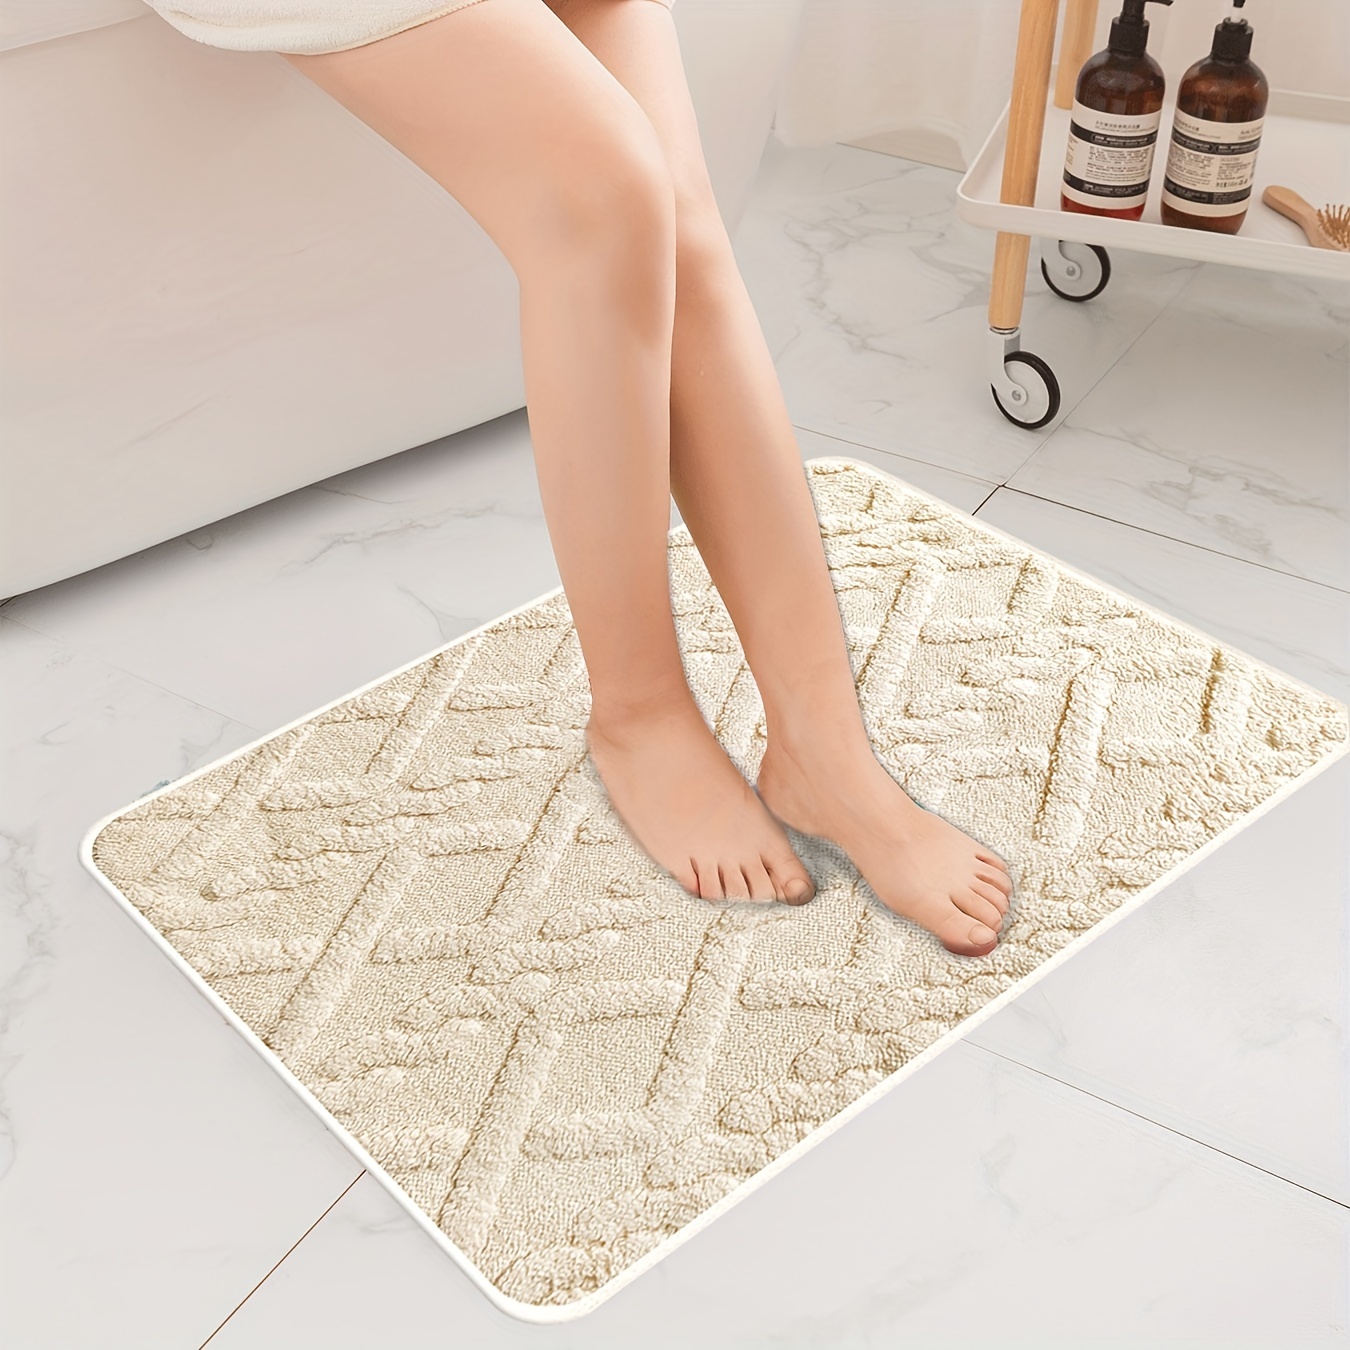 Taupe bath mats shower rugs slip-resistant extra absorbent soft and fluffy thick  bath mats, non-slip microfiber shag floor mats-50x80cm plus 43x 61cm